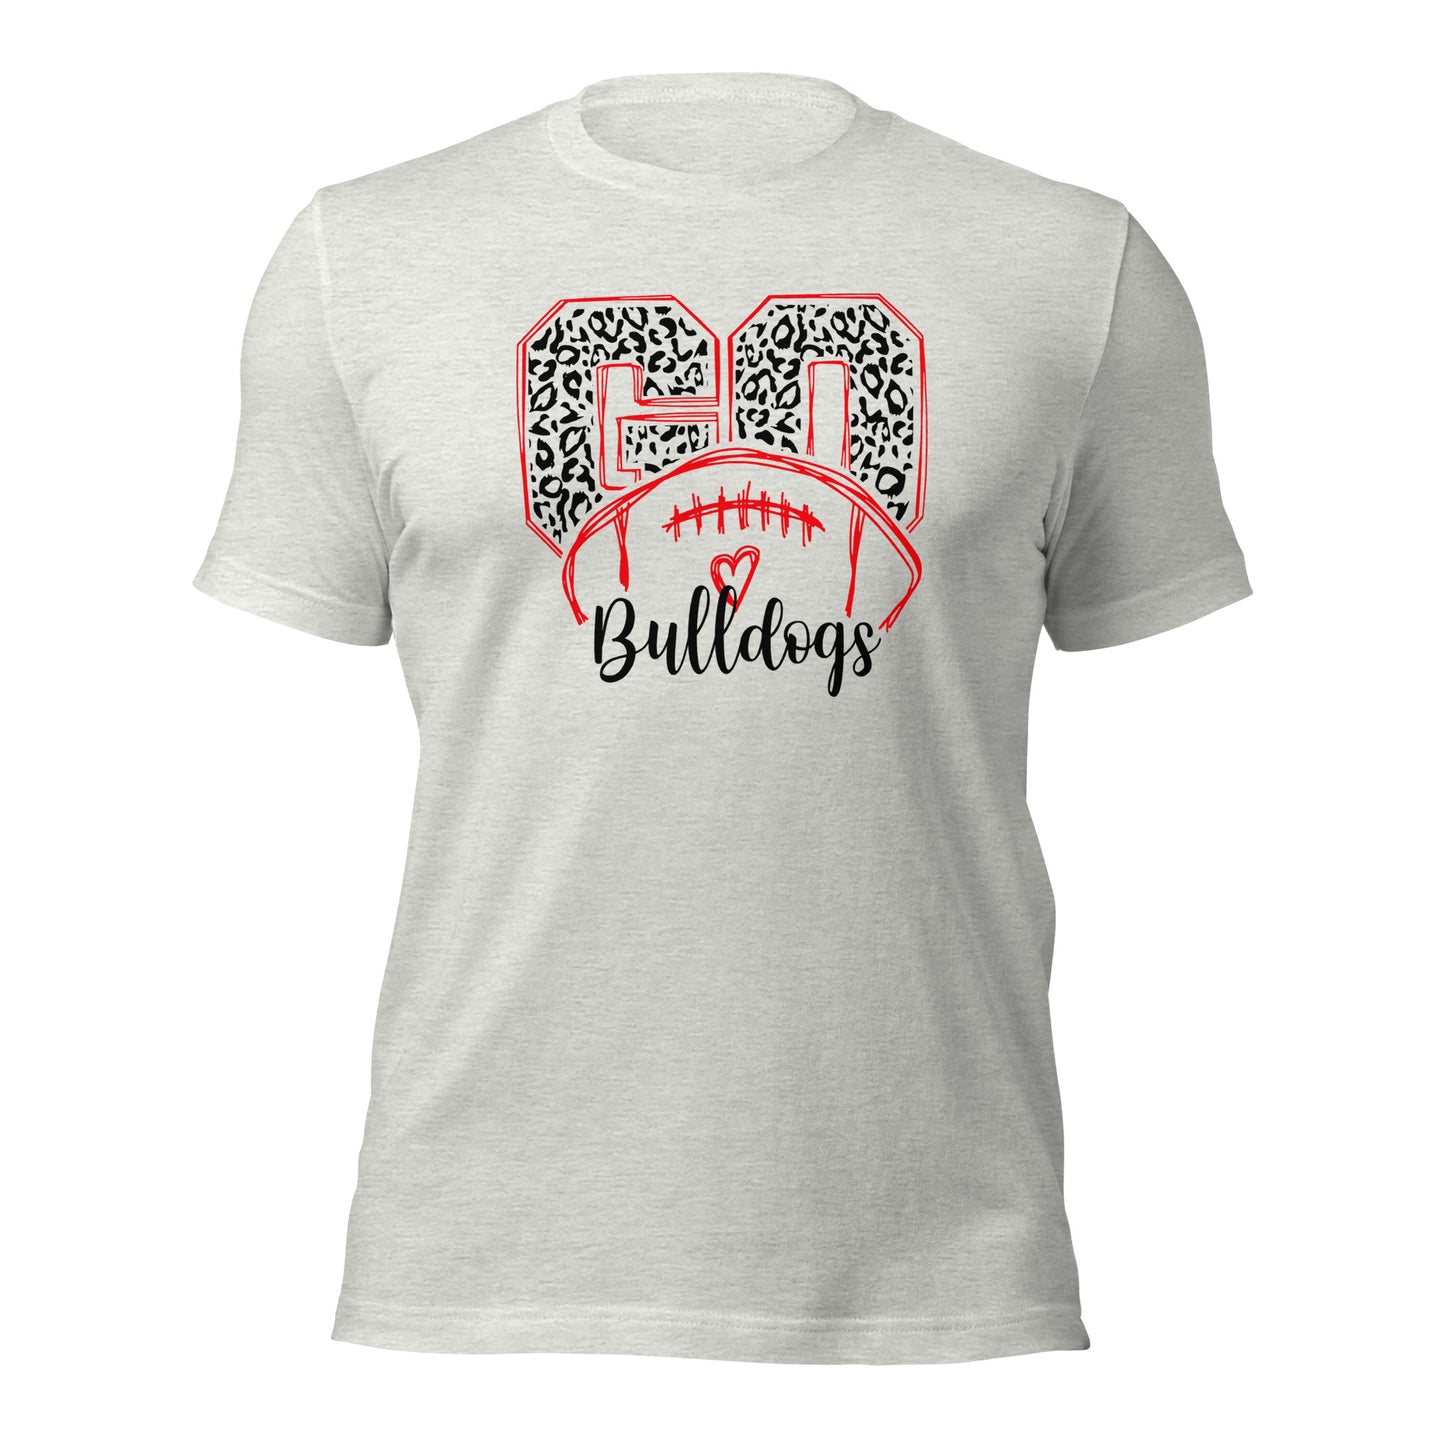 Go Bulldogs t-shirt